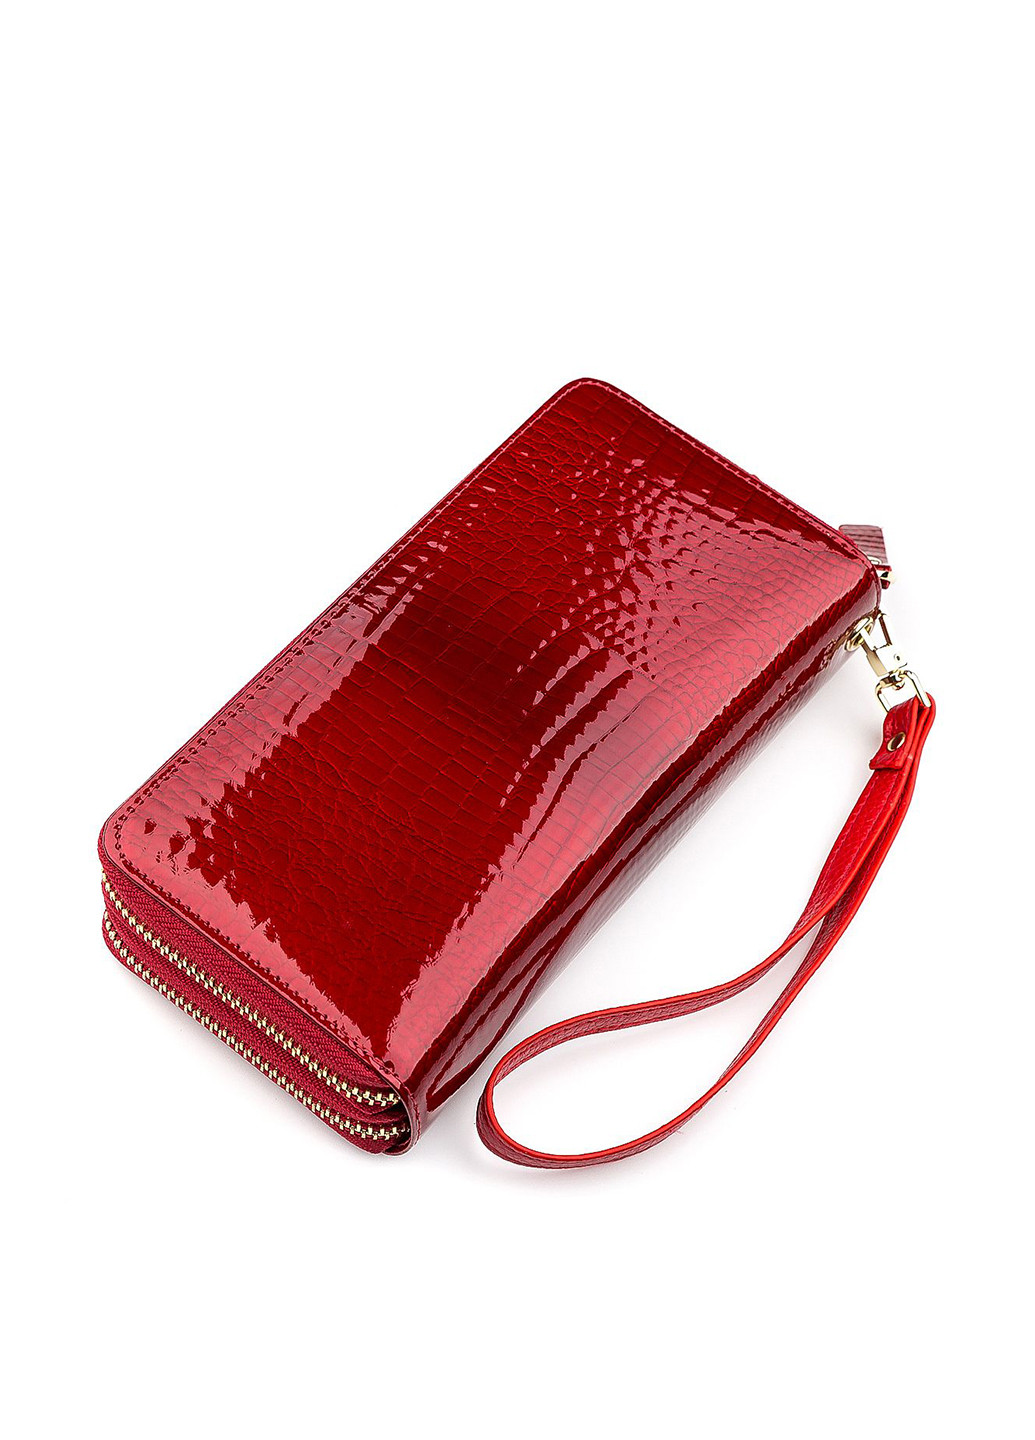 Кошелек ST Leather Accessories красный кэжуал